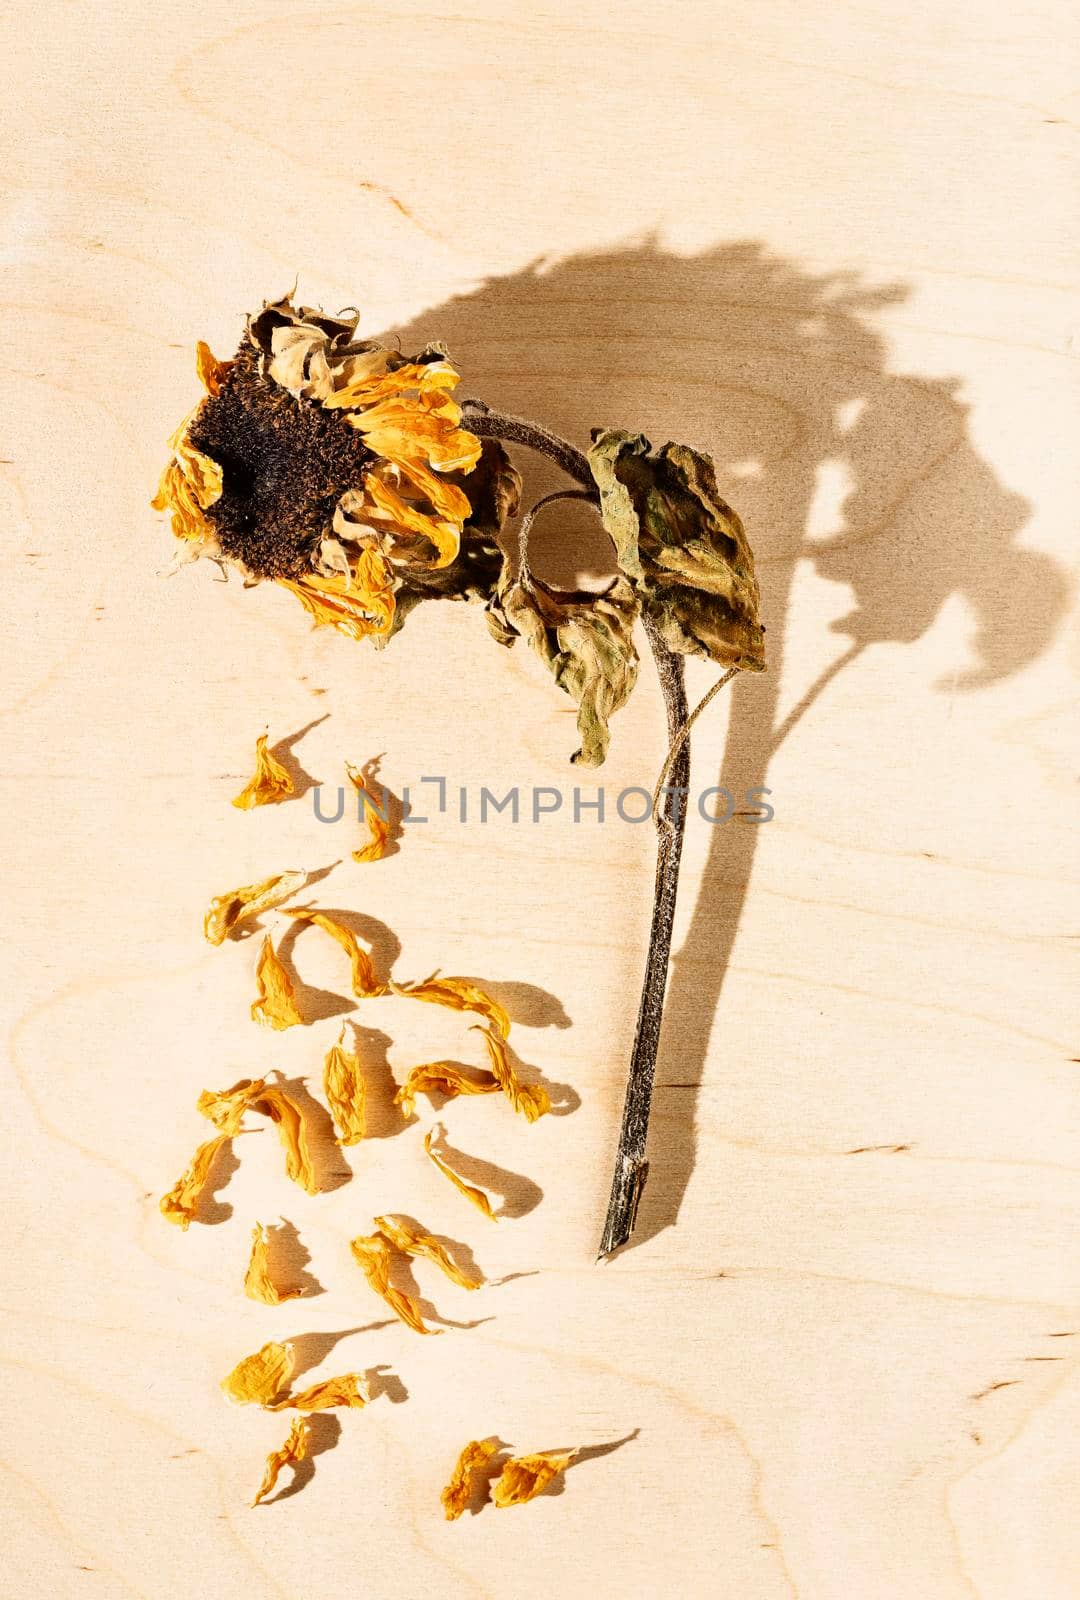 Dried sunflower studio short by victimewalker